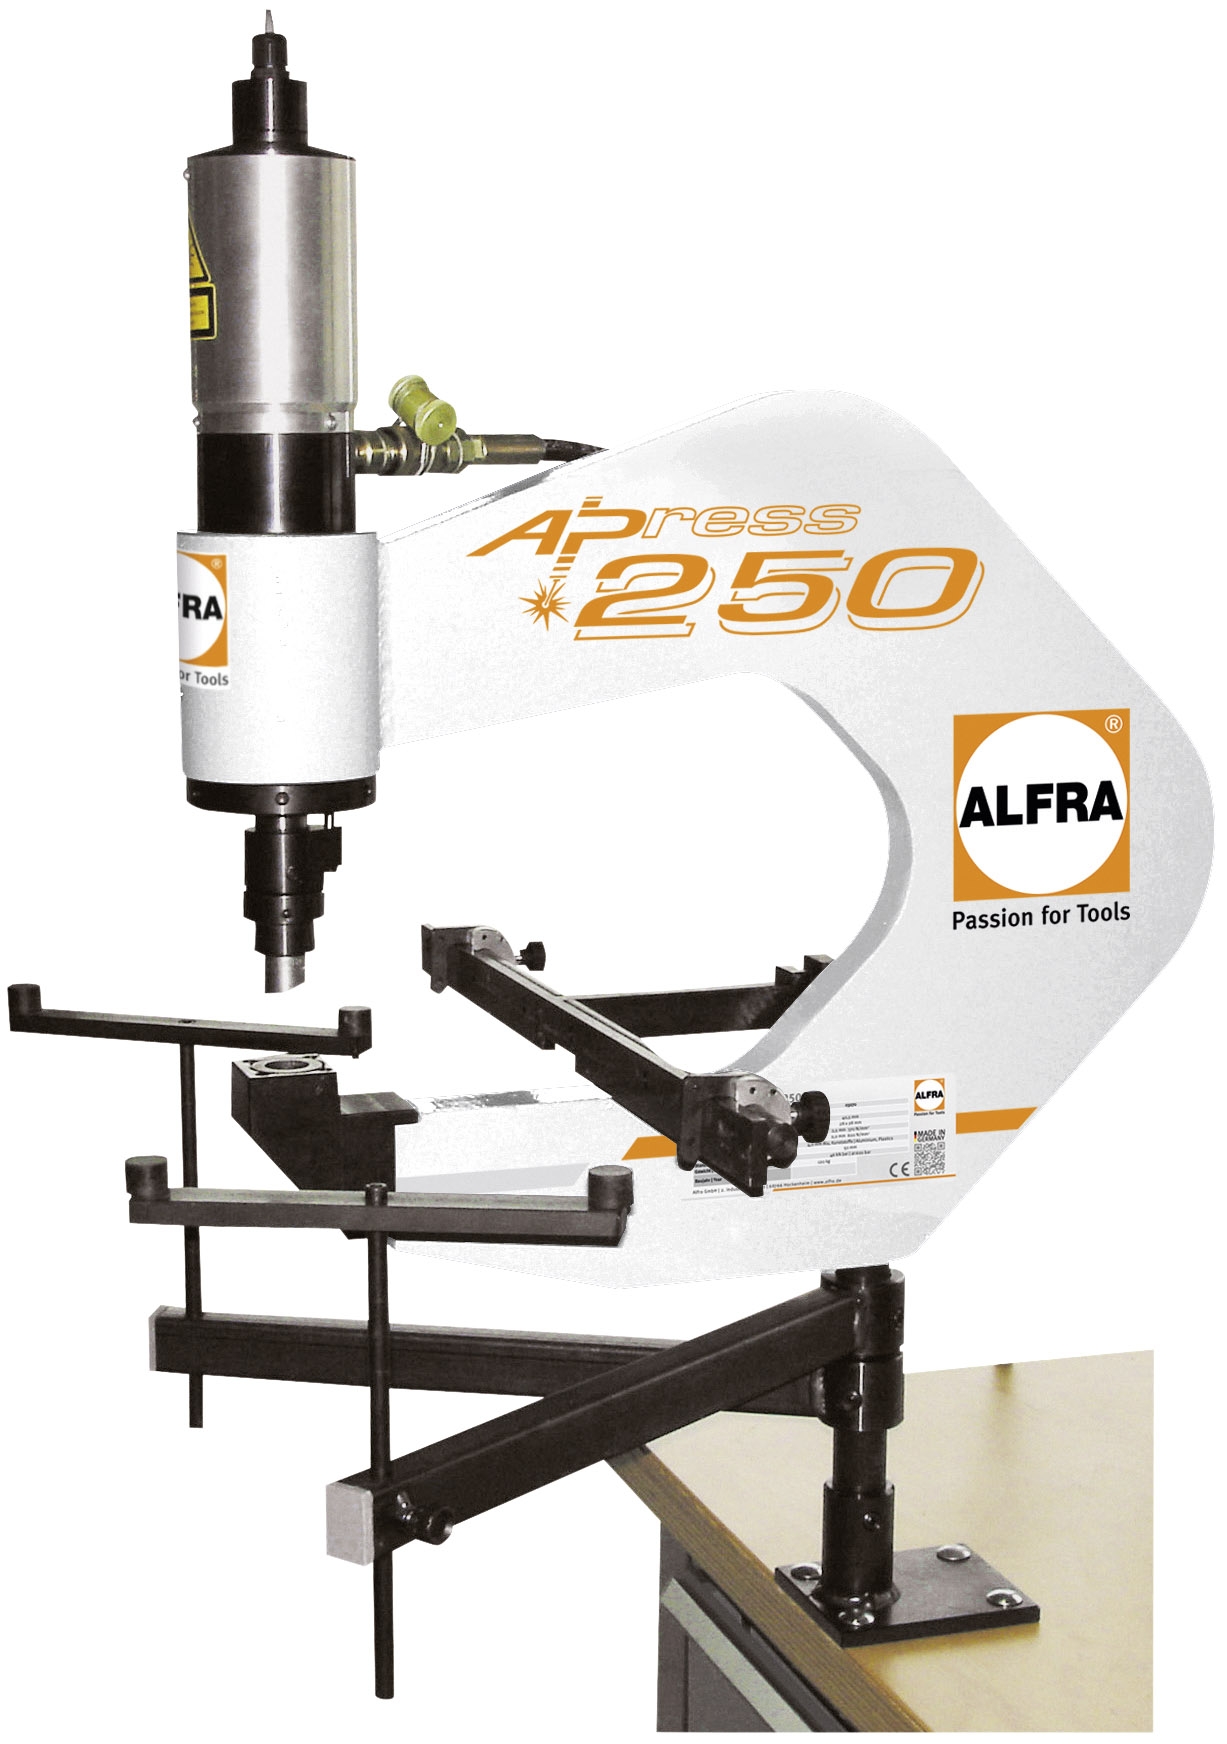 ALFRA Press AP 250 